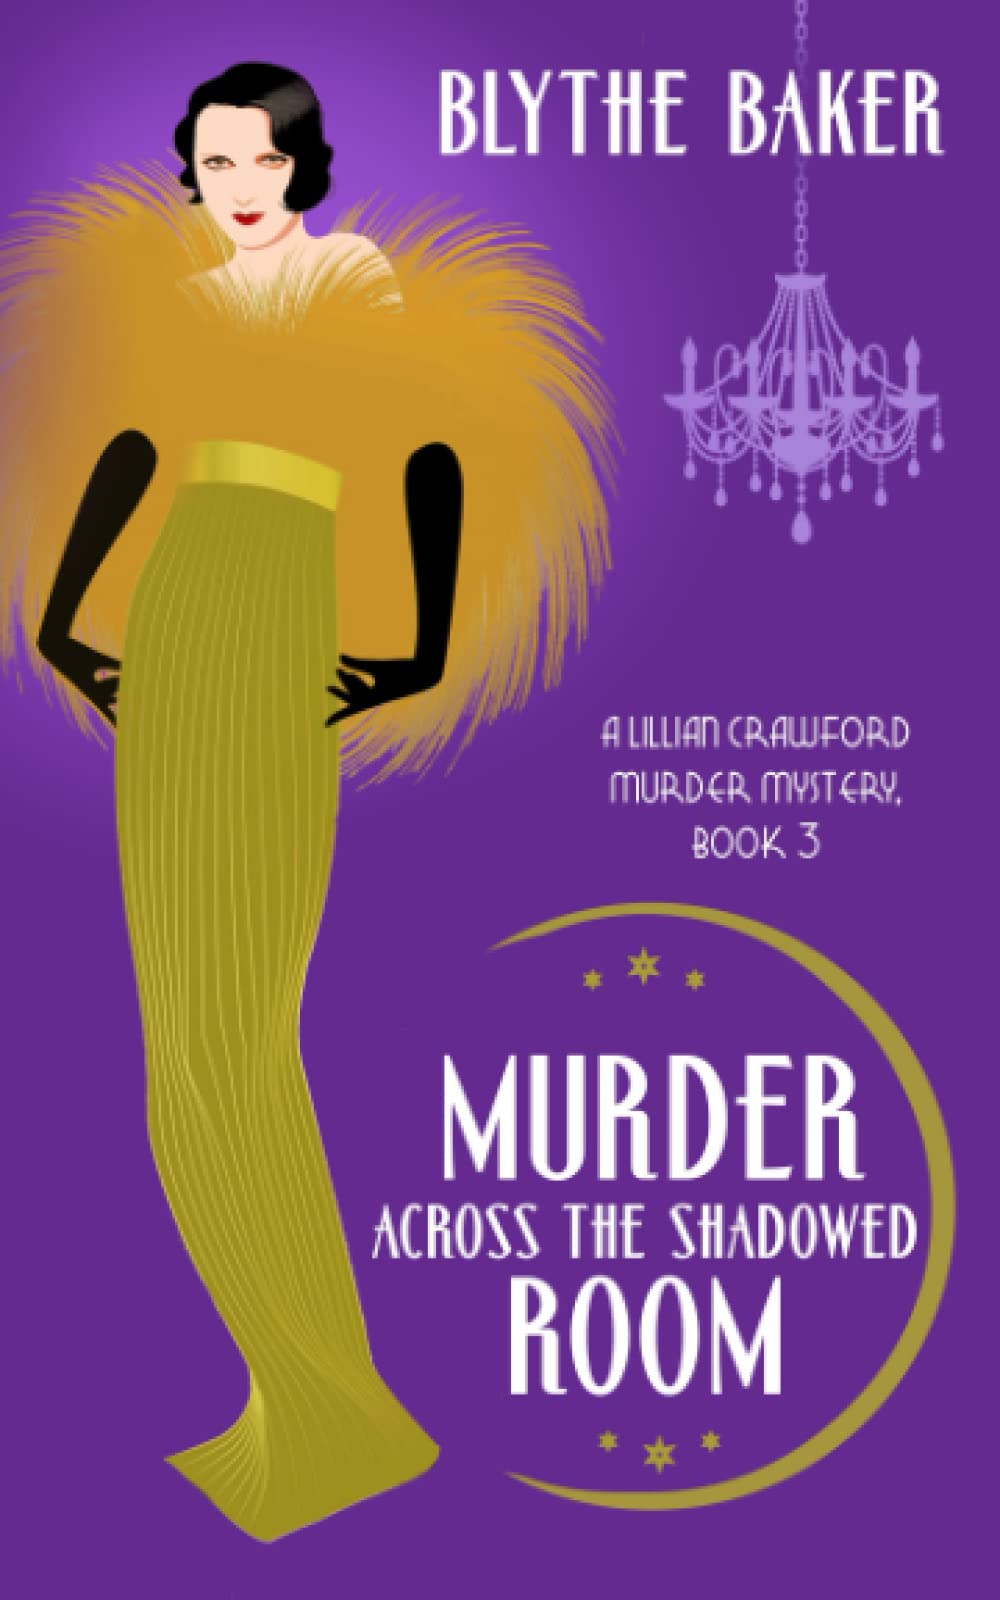 Murder Across the Shadowed Room by Blythe Baker